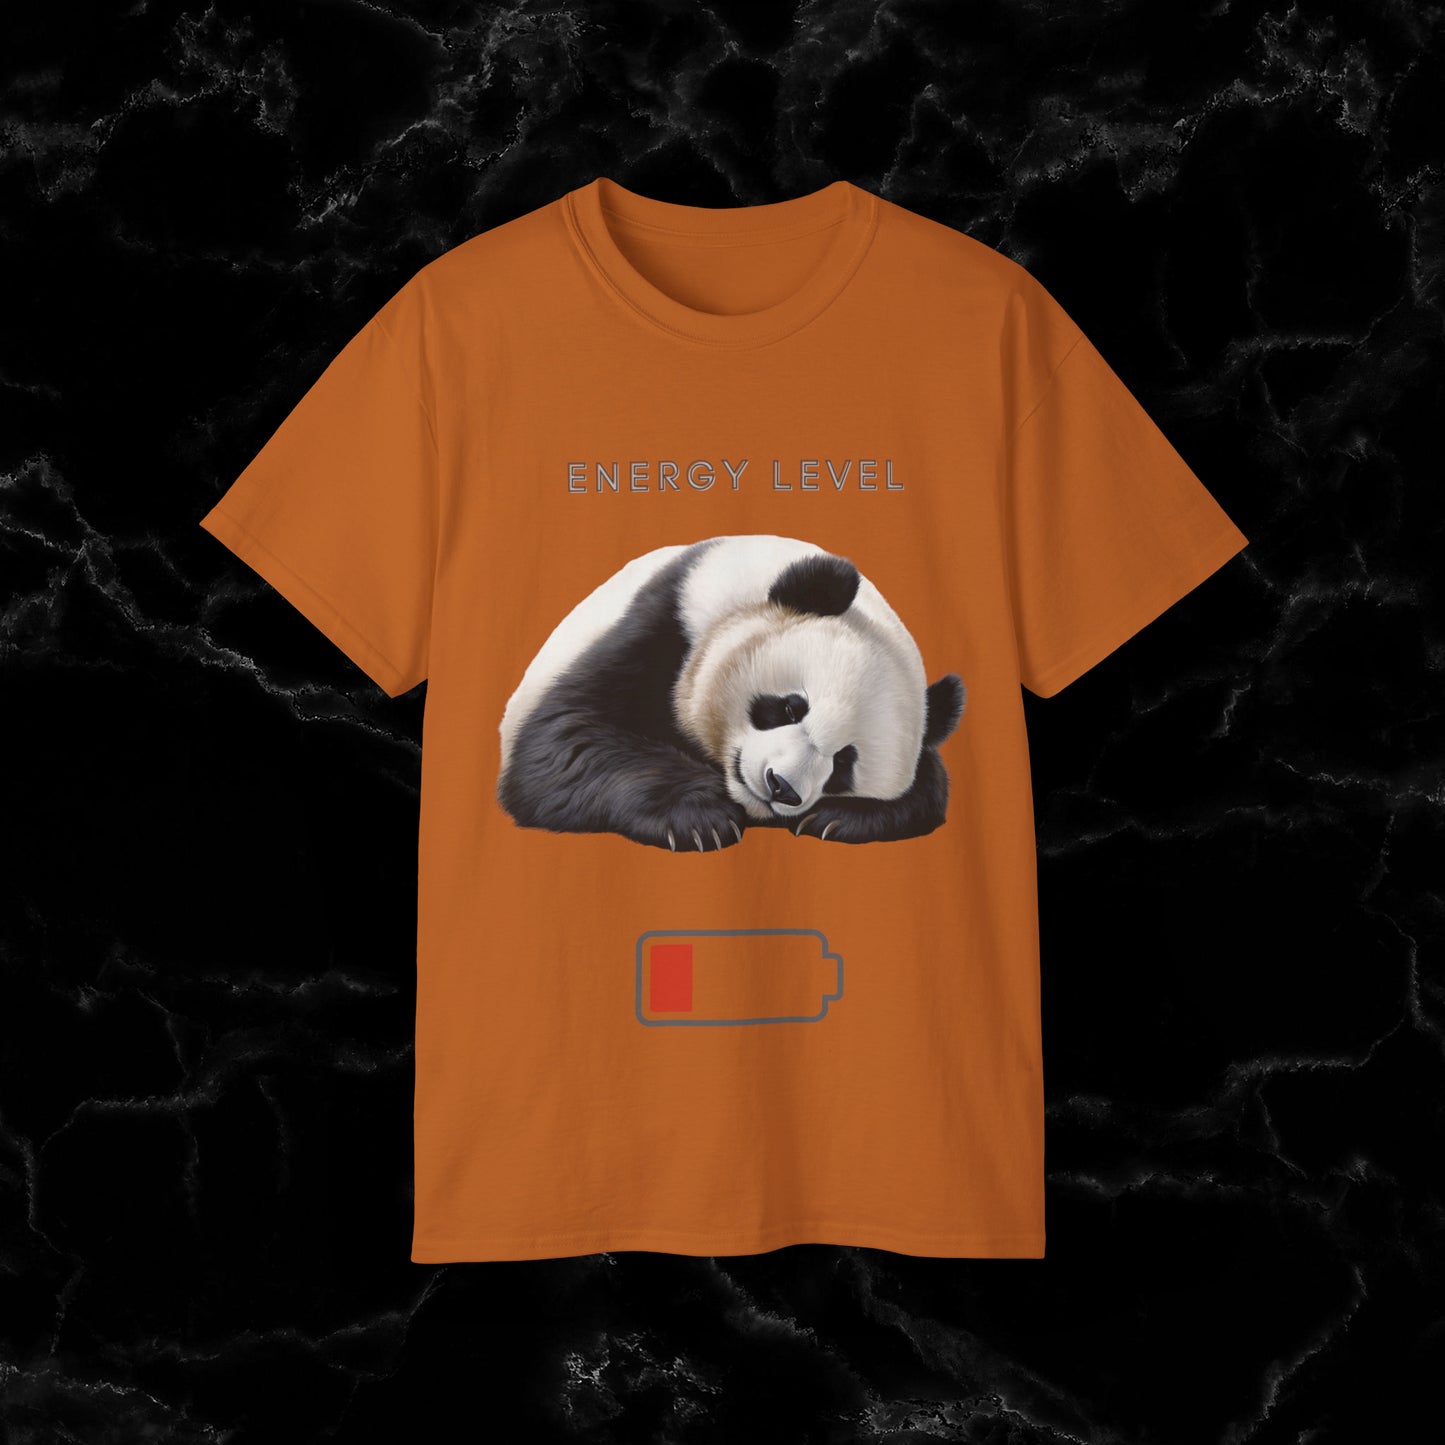 Nap Time Panda Unisex Funny Tee - Hilarious Panda Nap Design - Energy Level T-Shirt Texas Orange M 